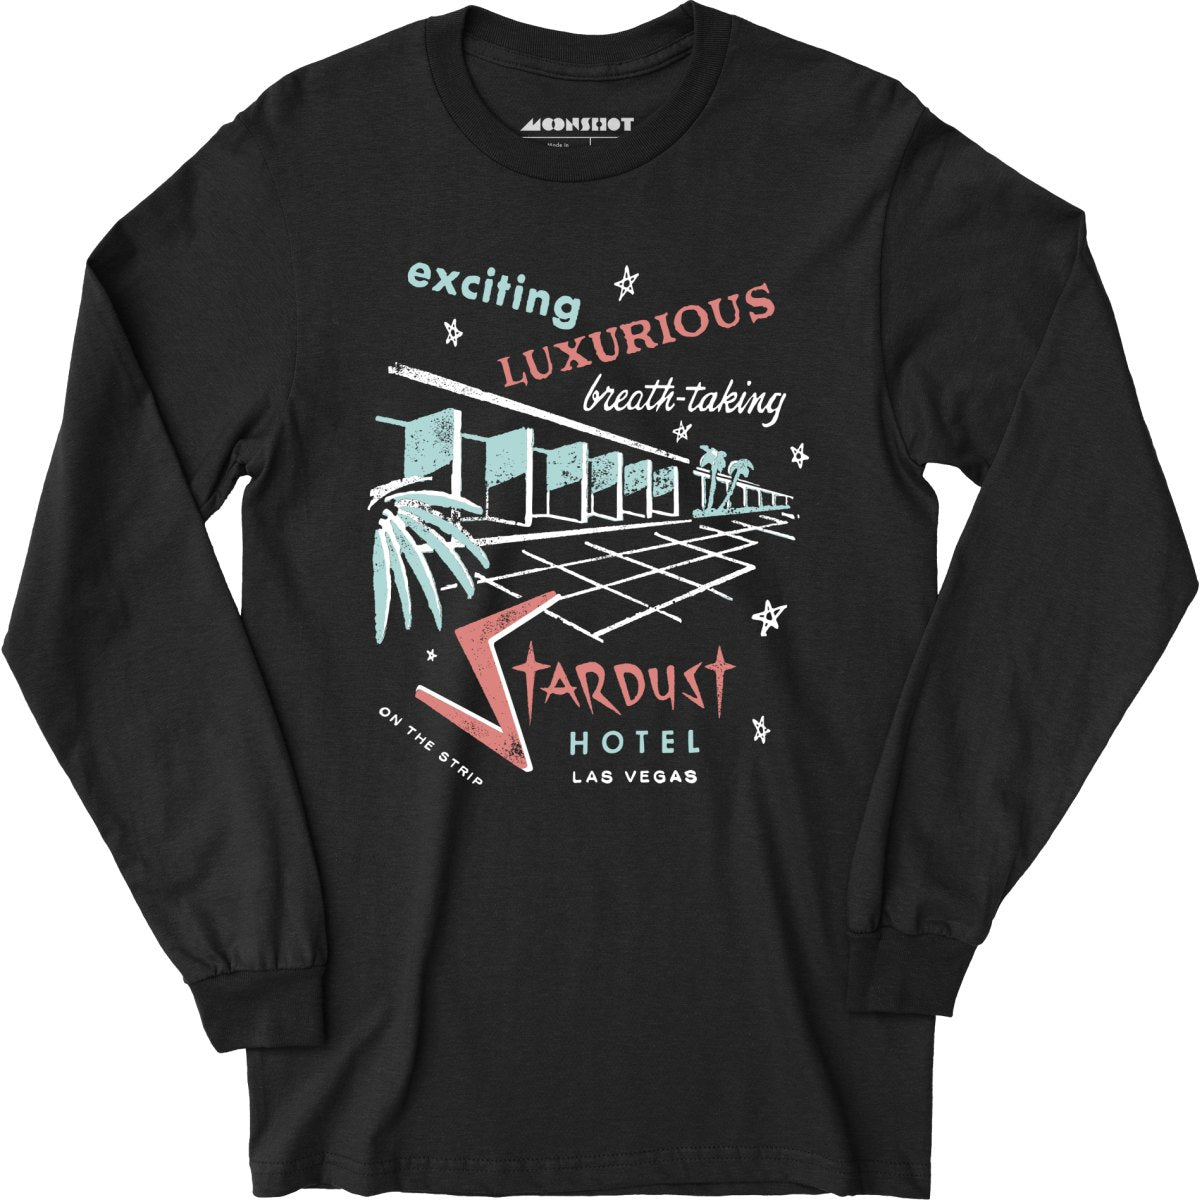 Stardust Hotel - Vintage Las Vegas - Long Sleeve T-Shirt